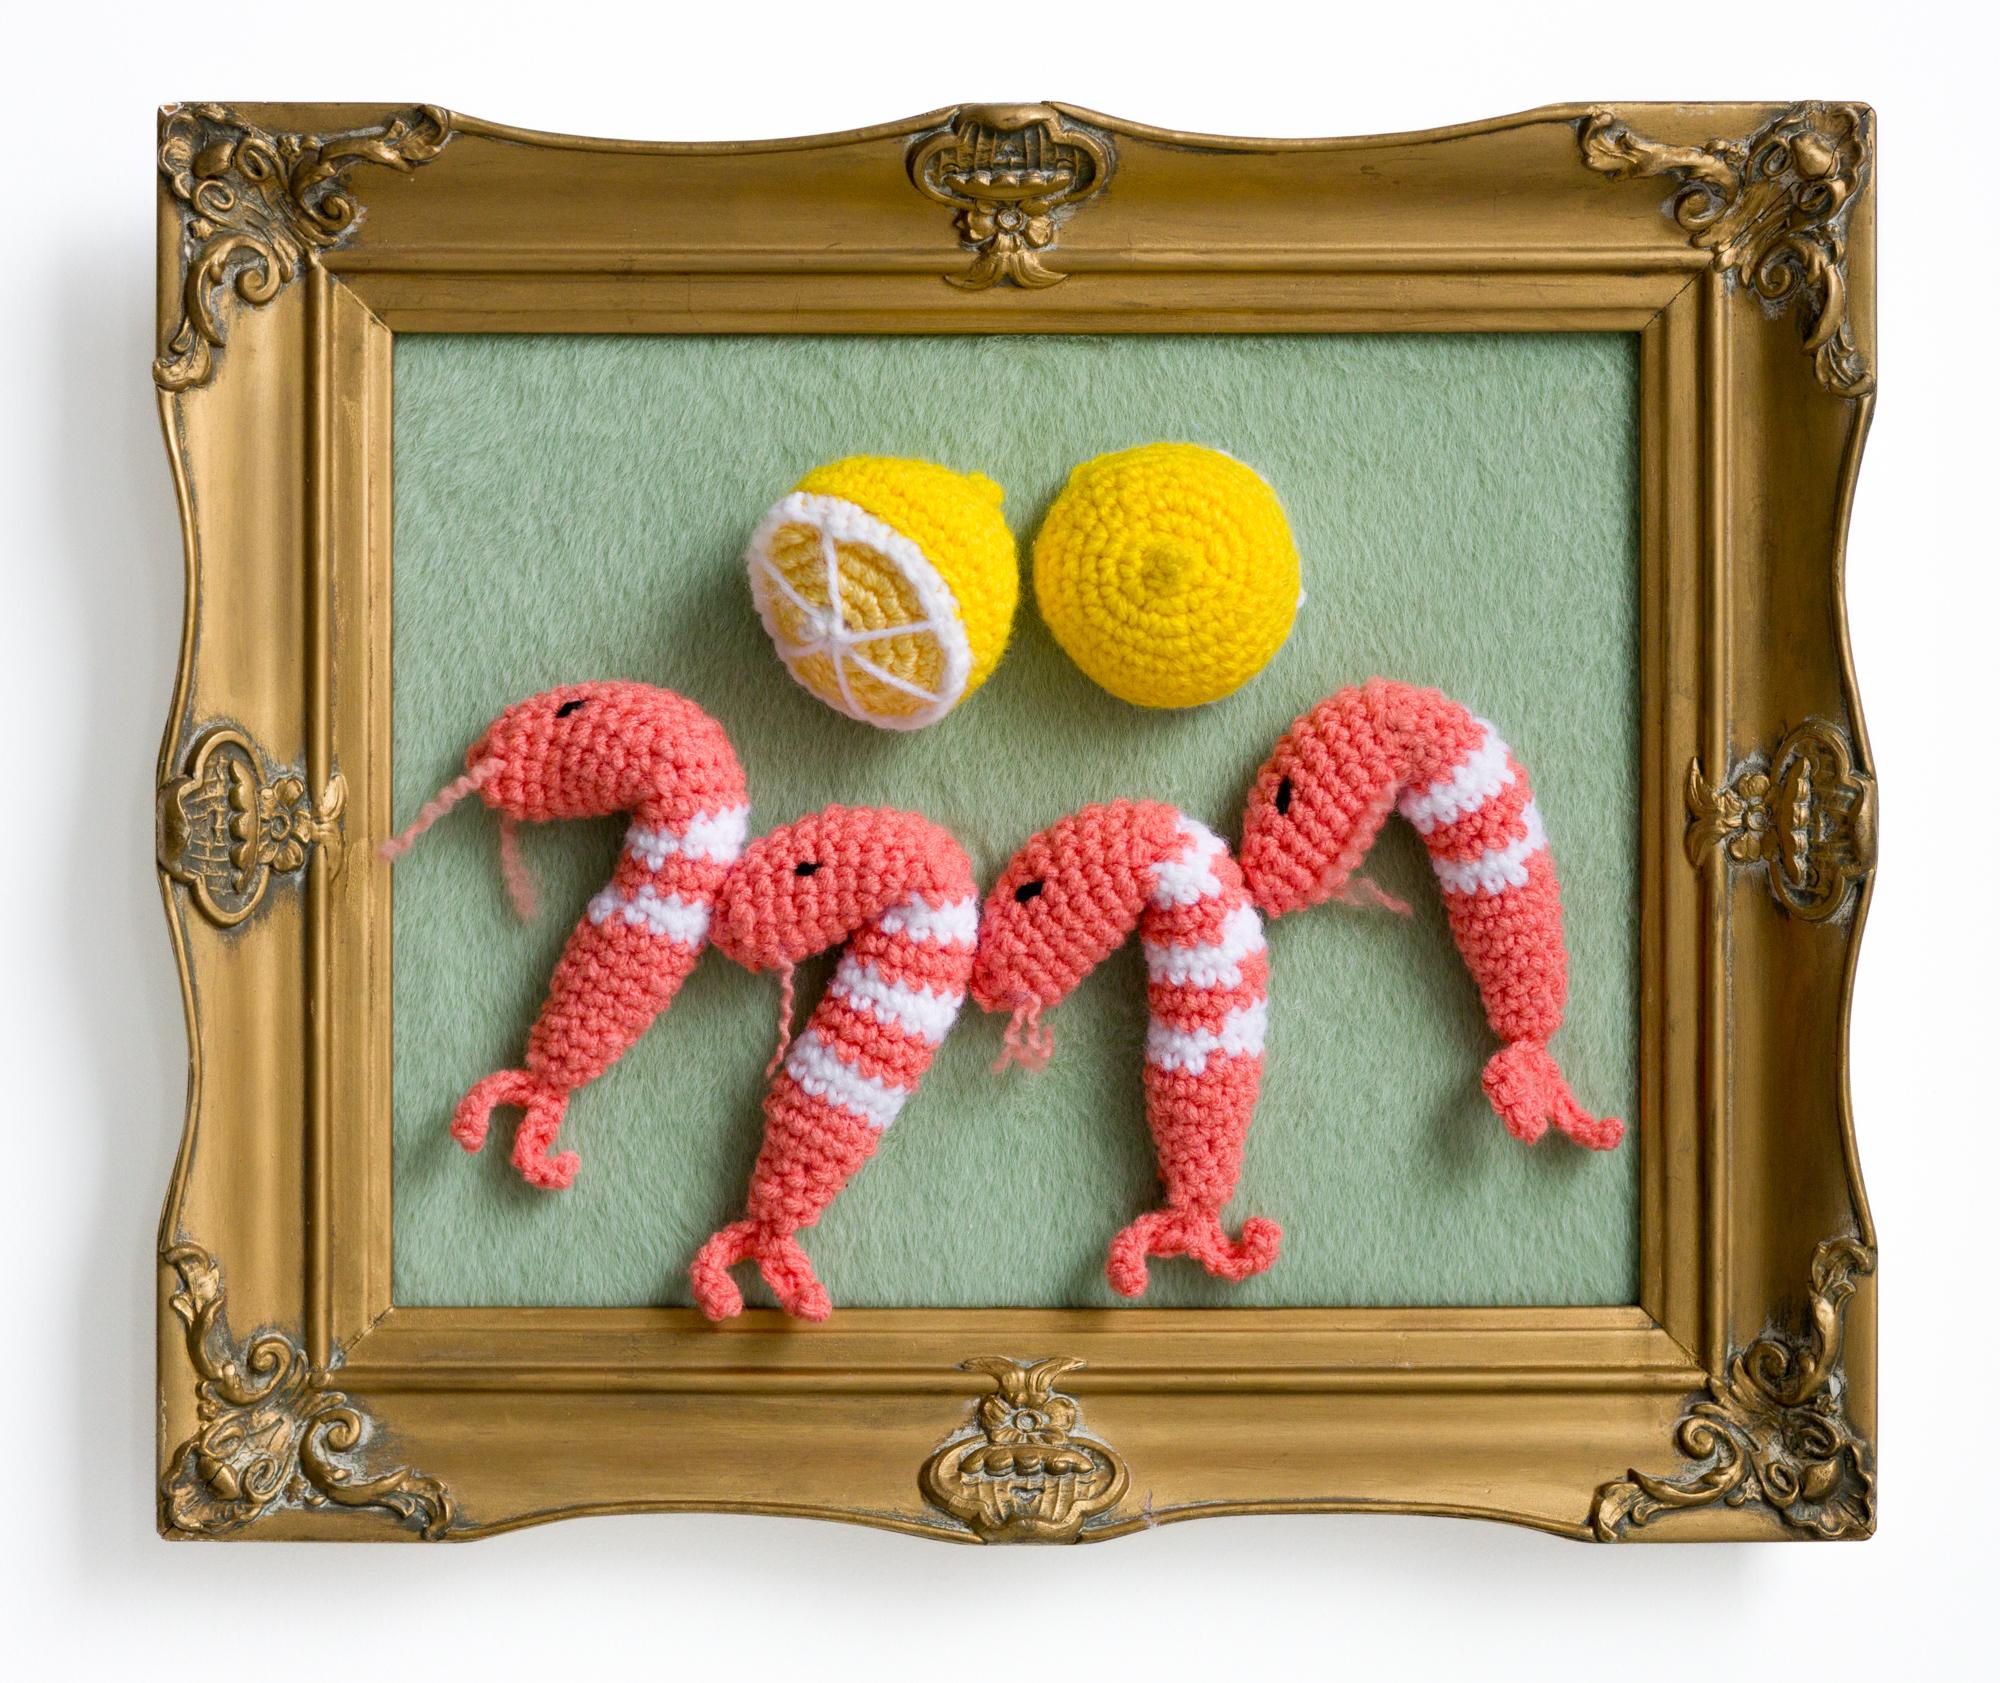 Nicole Nikolich, Lace in the Moon Still-Life Sculpture - "Shrimp Appetizer", Seafood, Crochet Acrylic in Vintage Frame, lemons